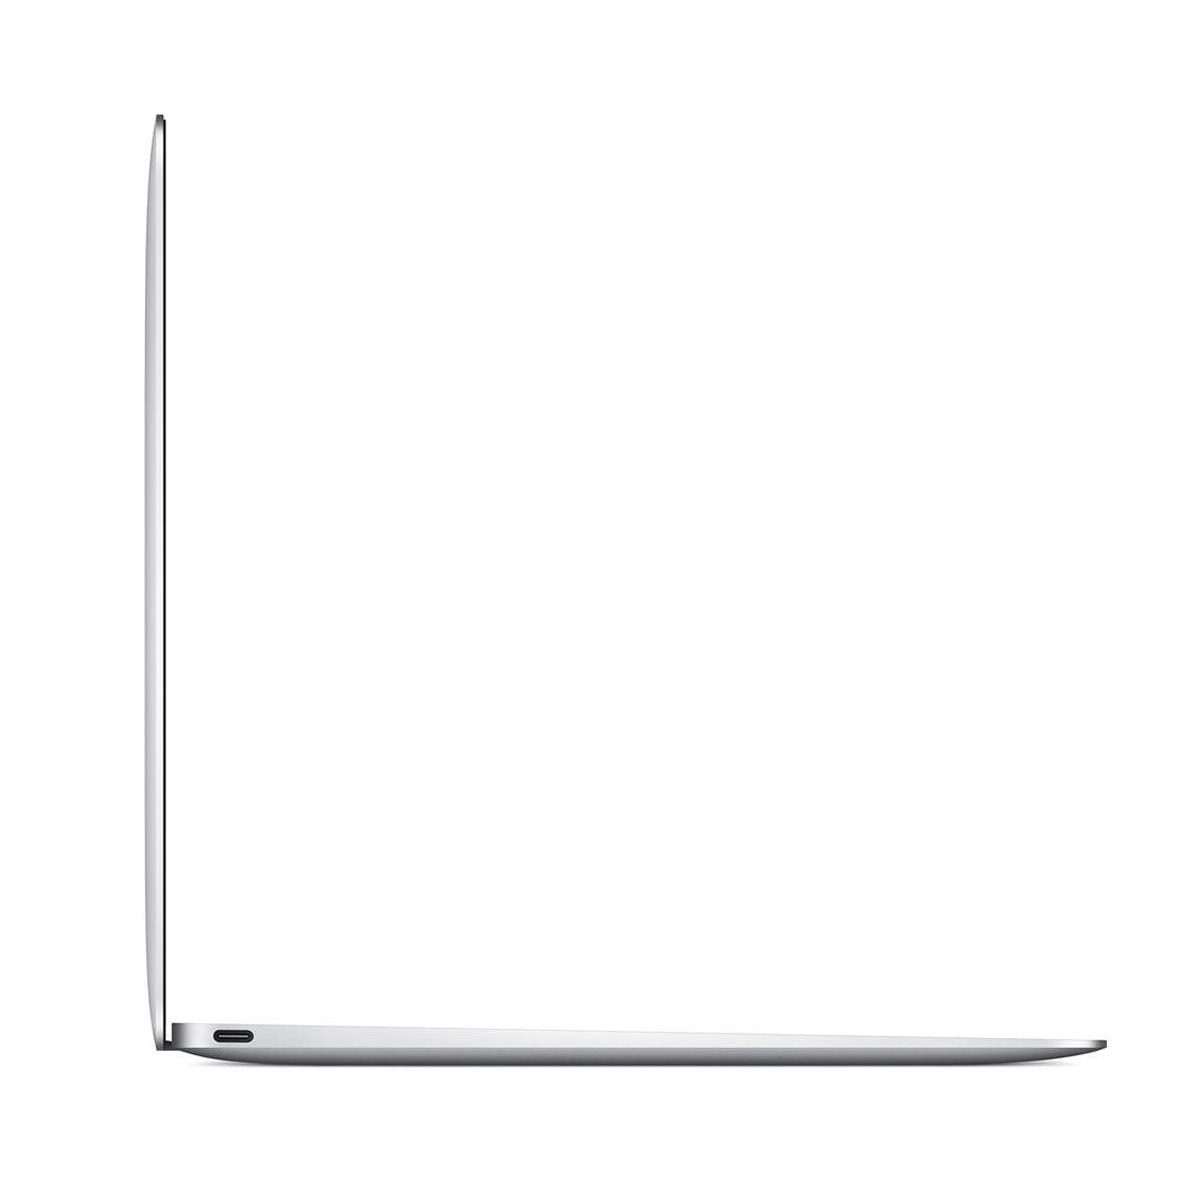 Ноутбук Apple MacBook 12 Retina Early 2015 Silver (MF865RU/A) (Core M 1200 Mhz/12.0/2304x1440/8.0Gb/512Gb SSD/DVD нет/Intel HD Graphics 5300/Wi-Fi/Bluetooth/MacOS X)